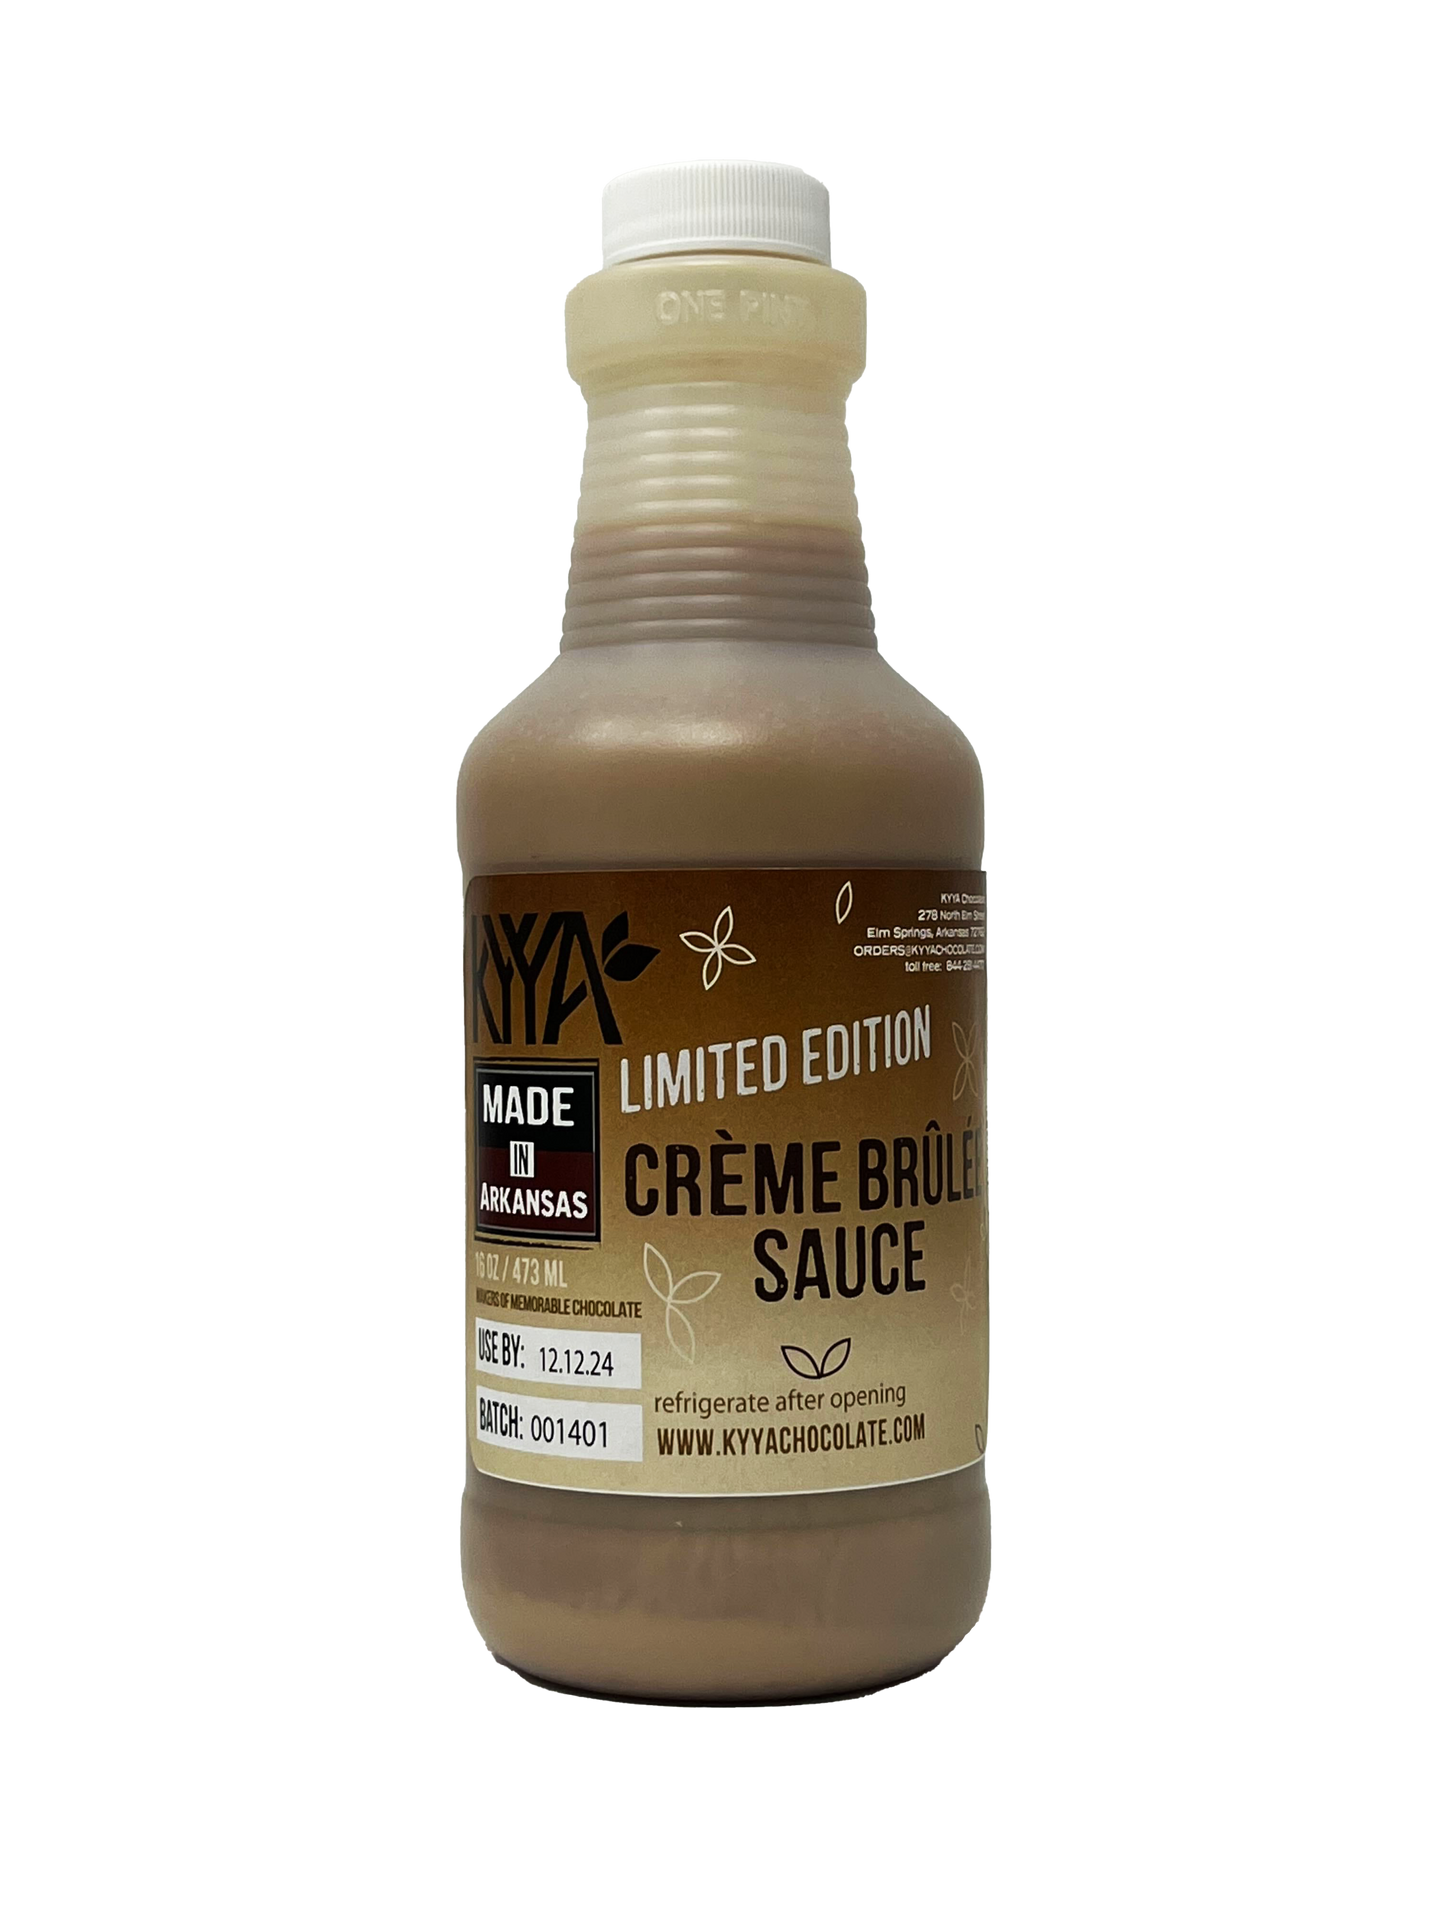 Creme Brulee Sauce